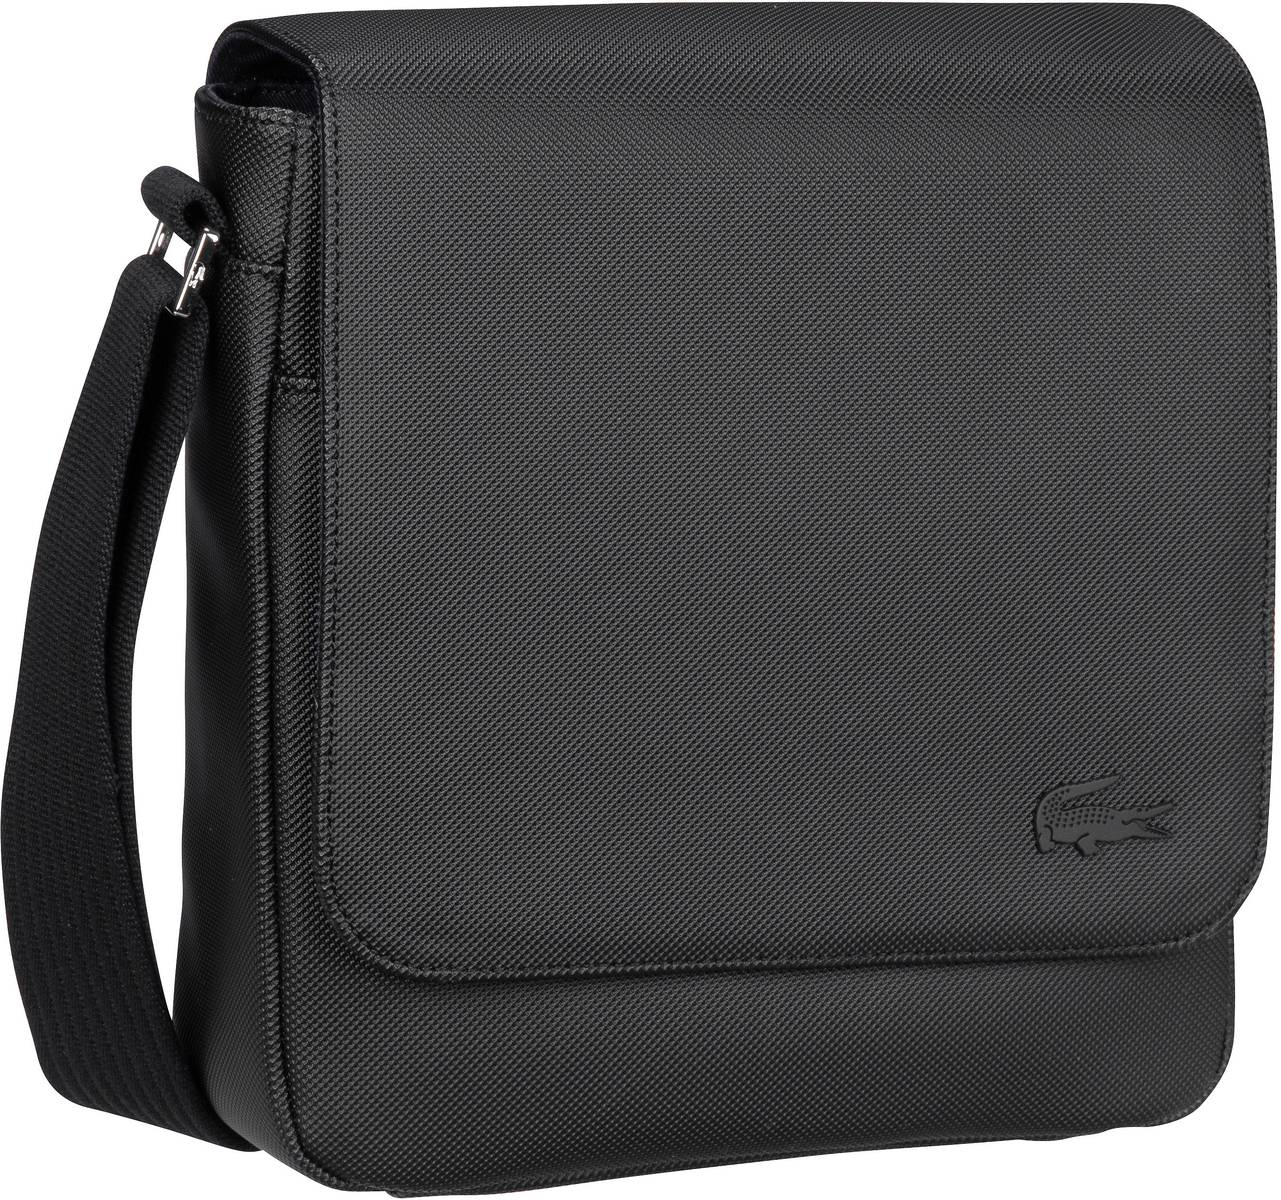 Lacoste Men's Classic Crossover Bag 2341 - Black